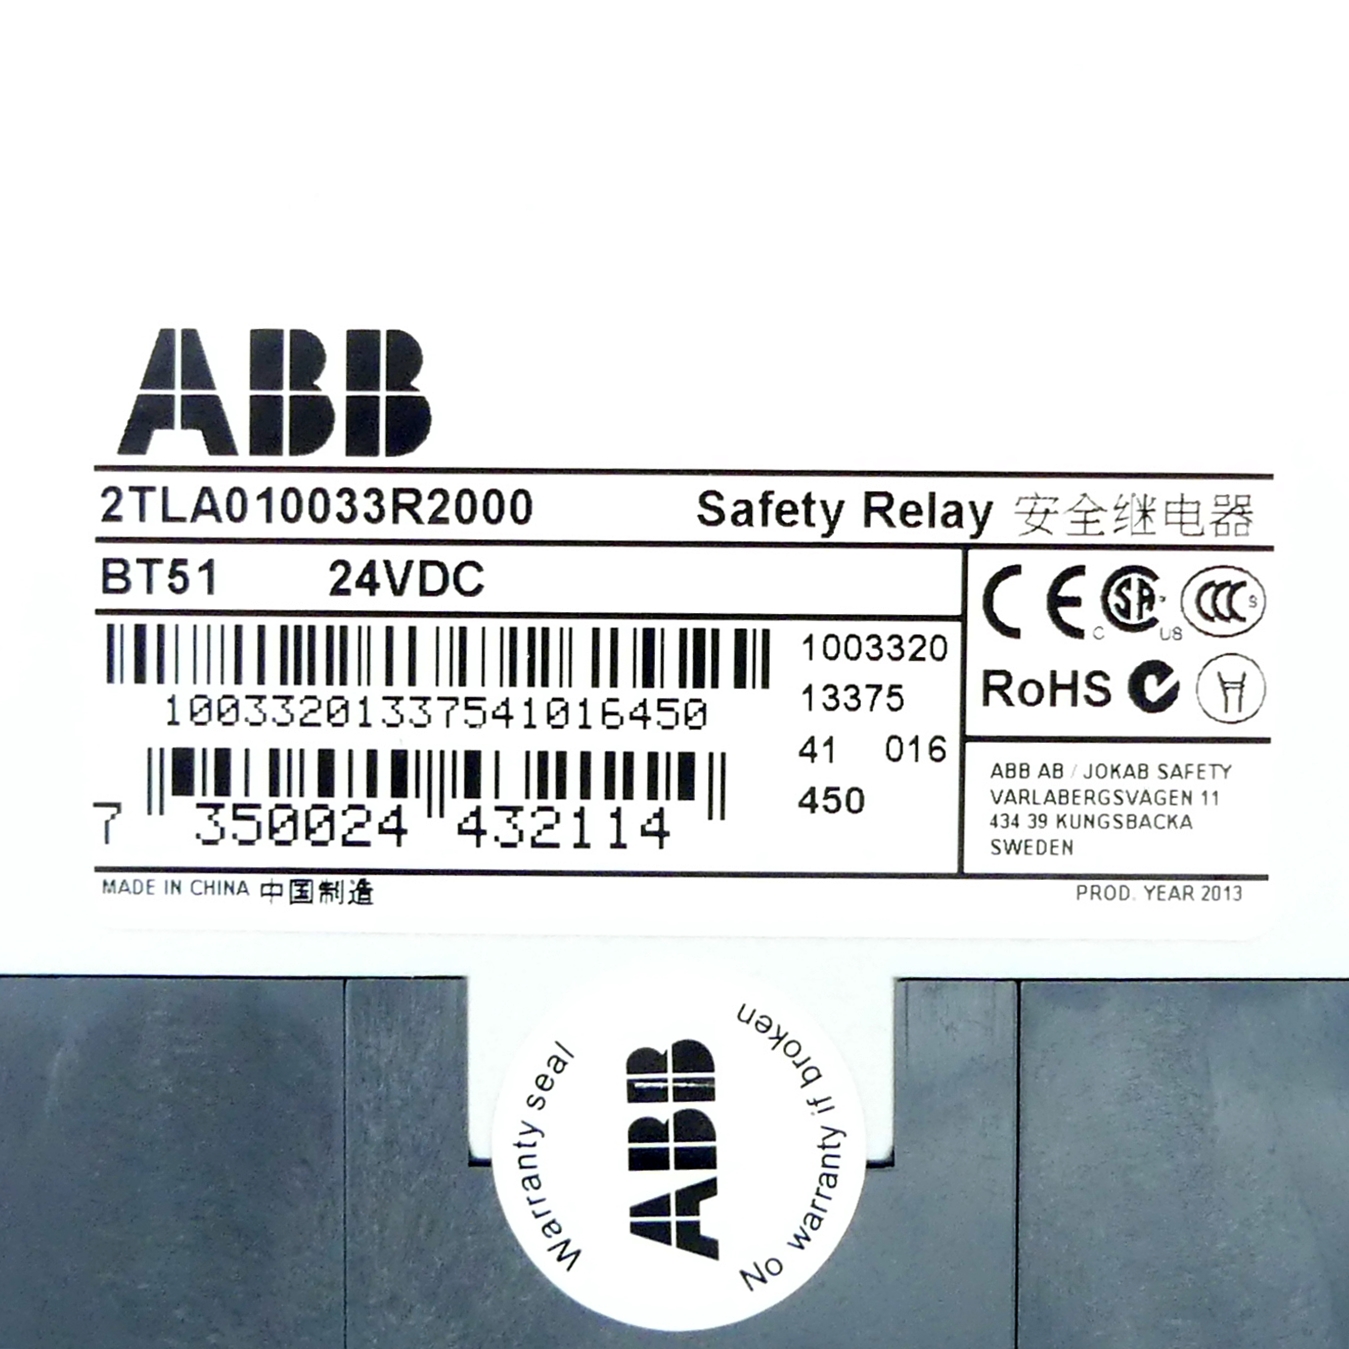 Safety relay BT51 